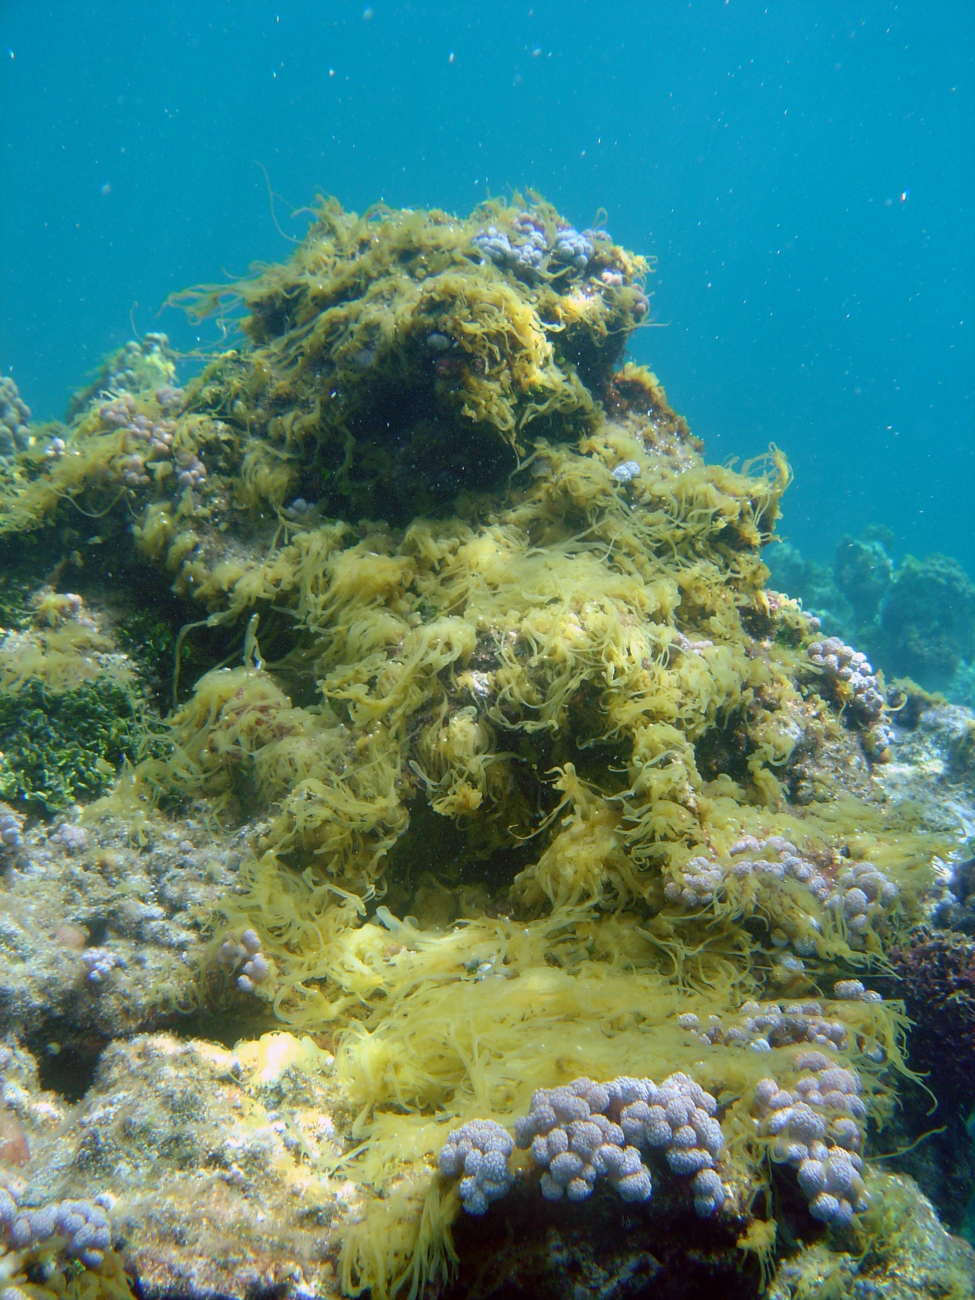 Algae covering dead coral reef